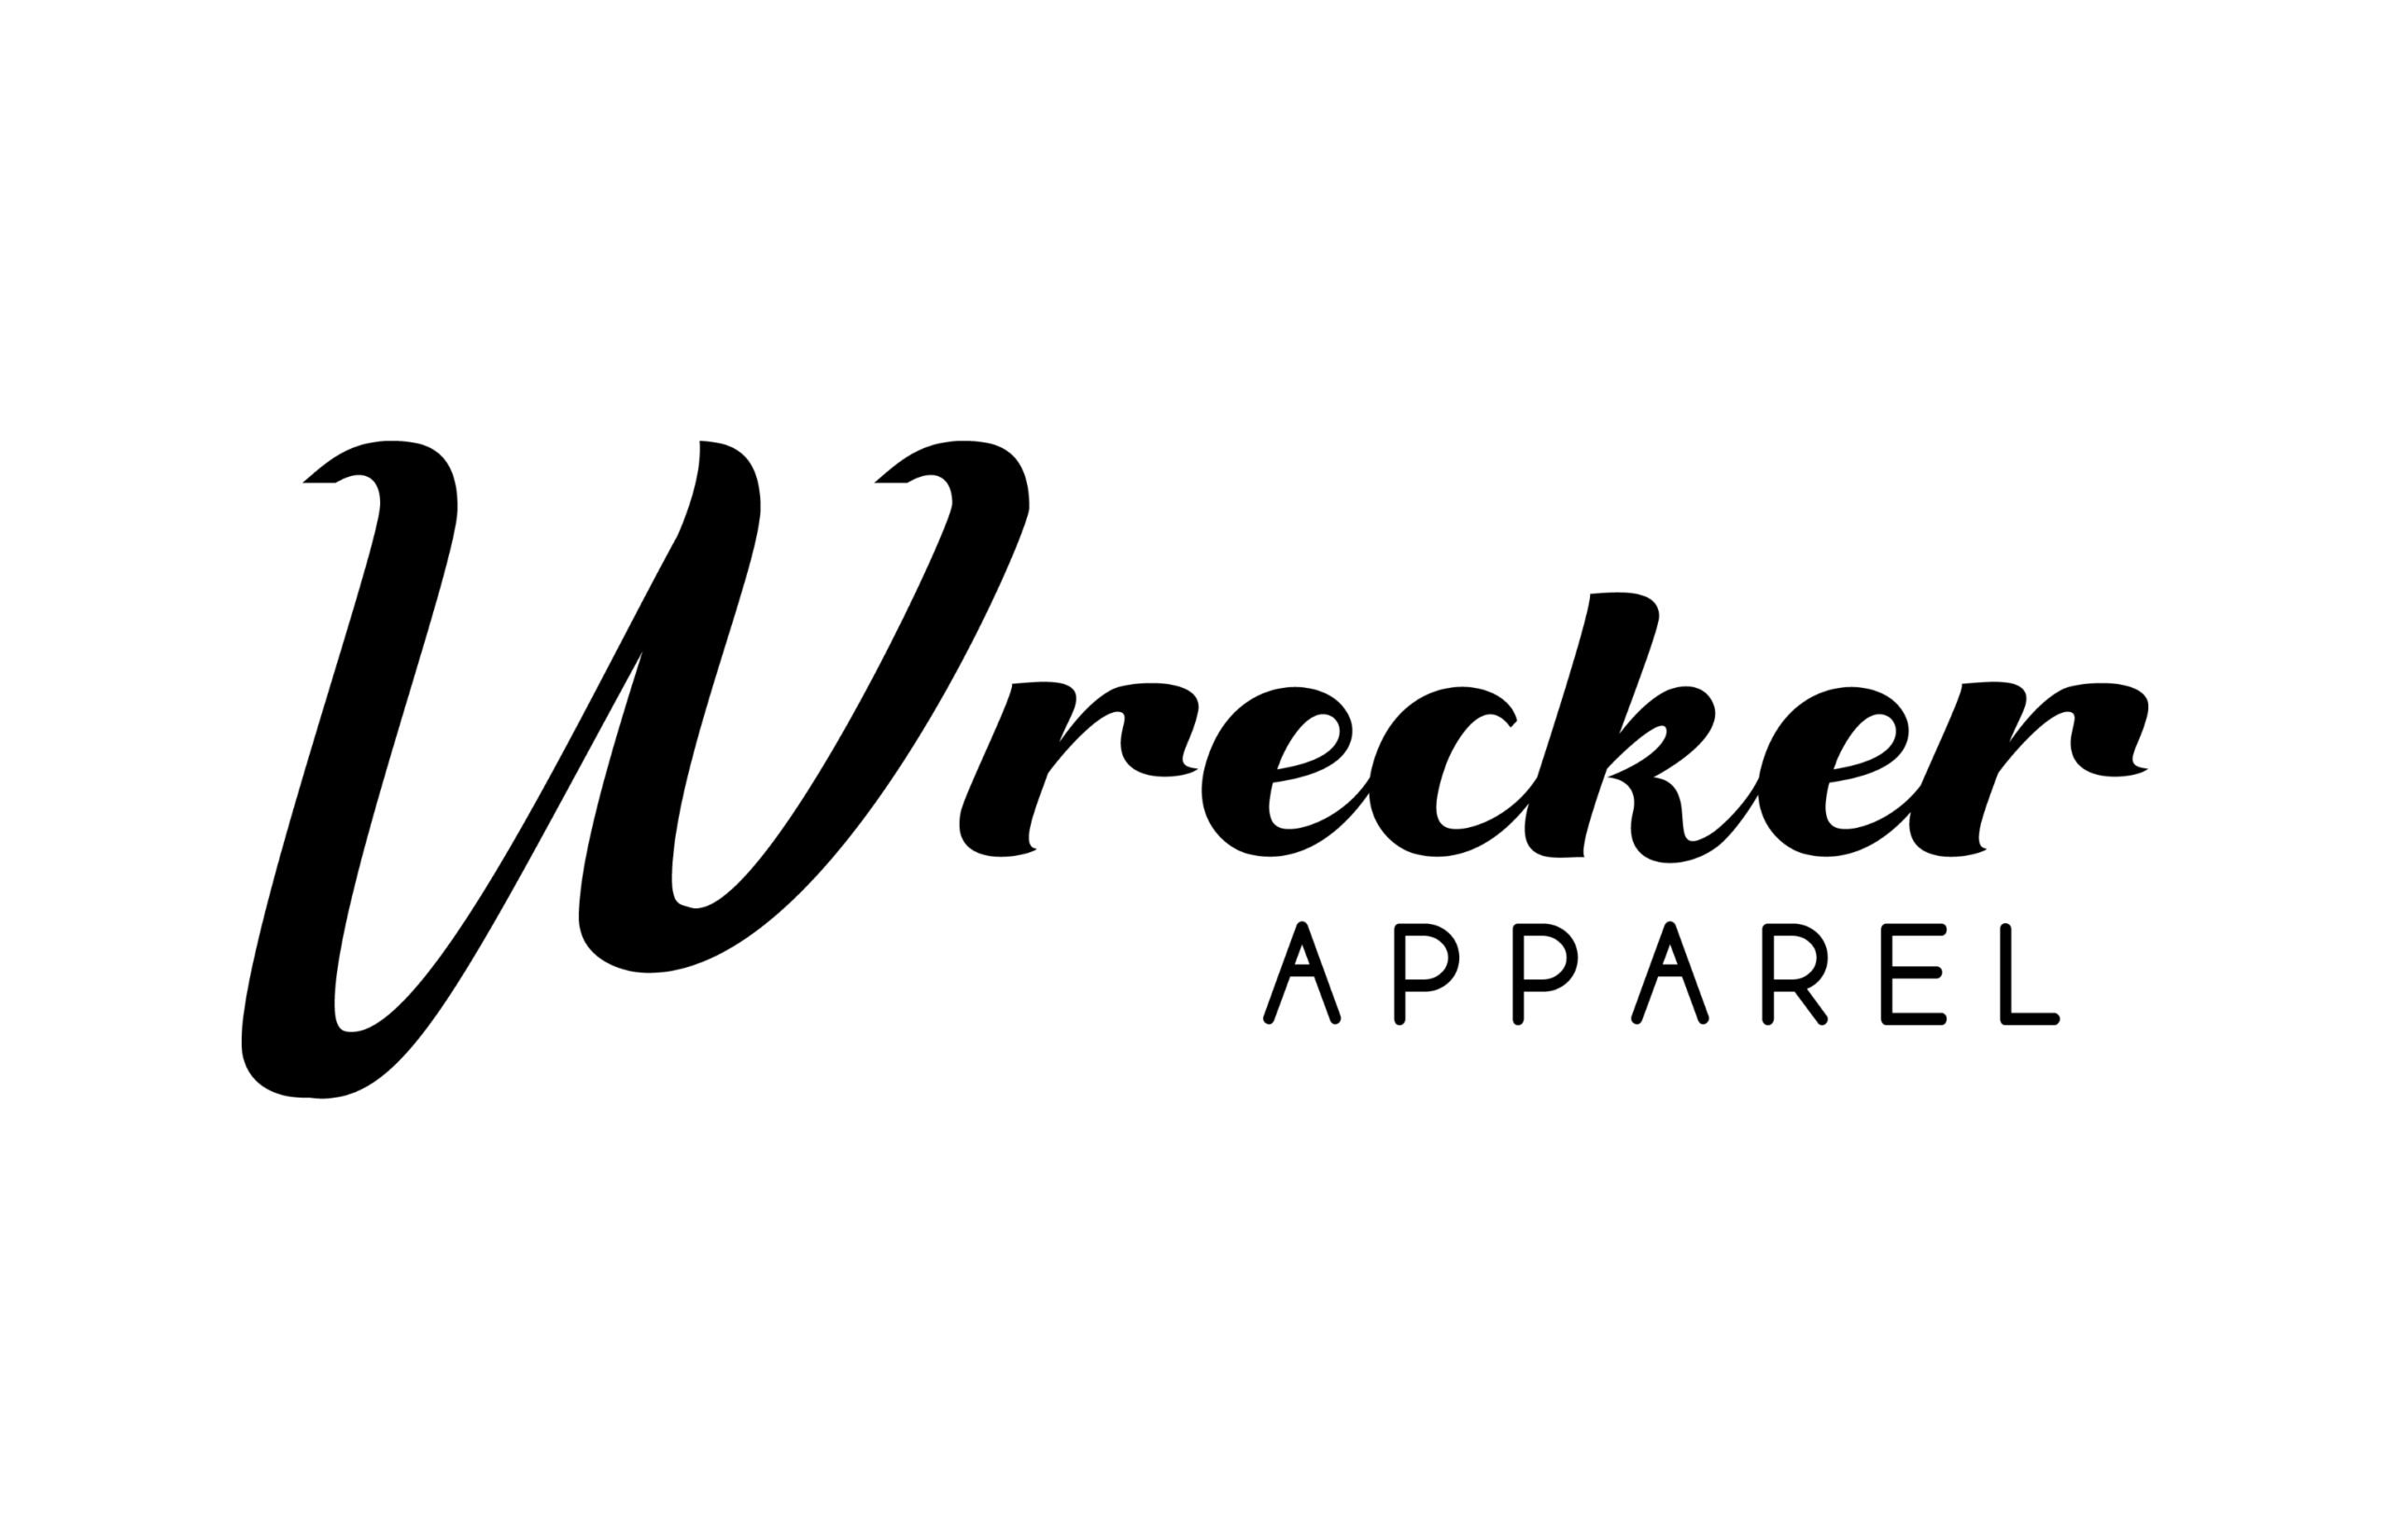 Wrecker Apparel